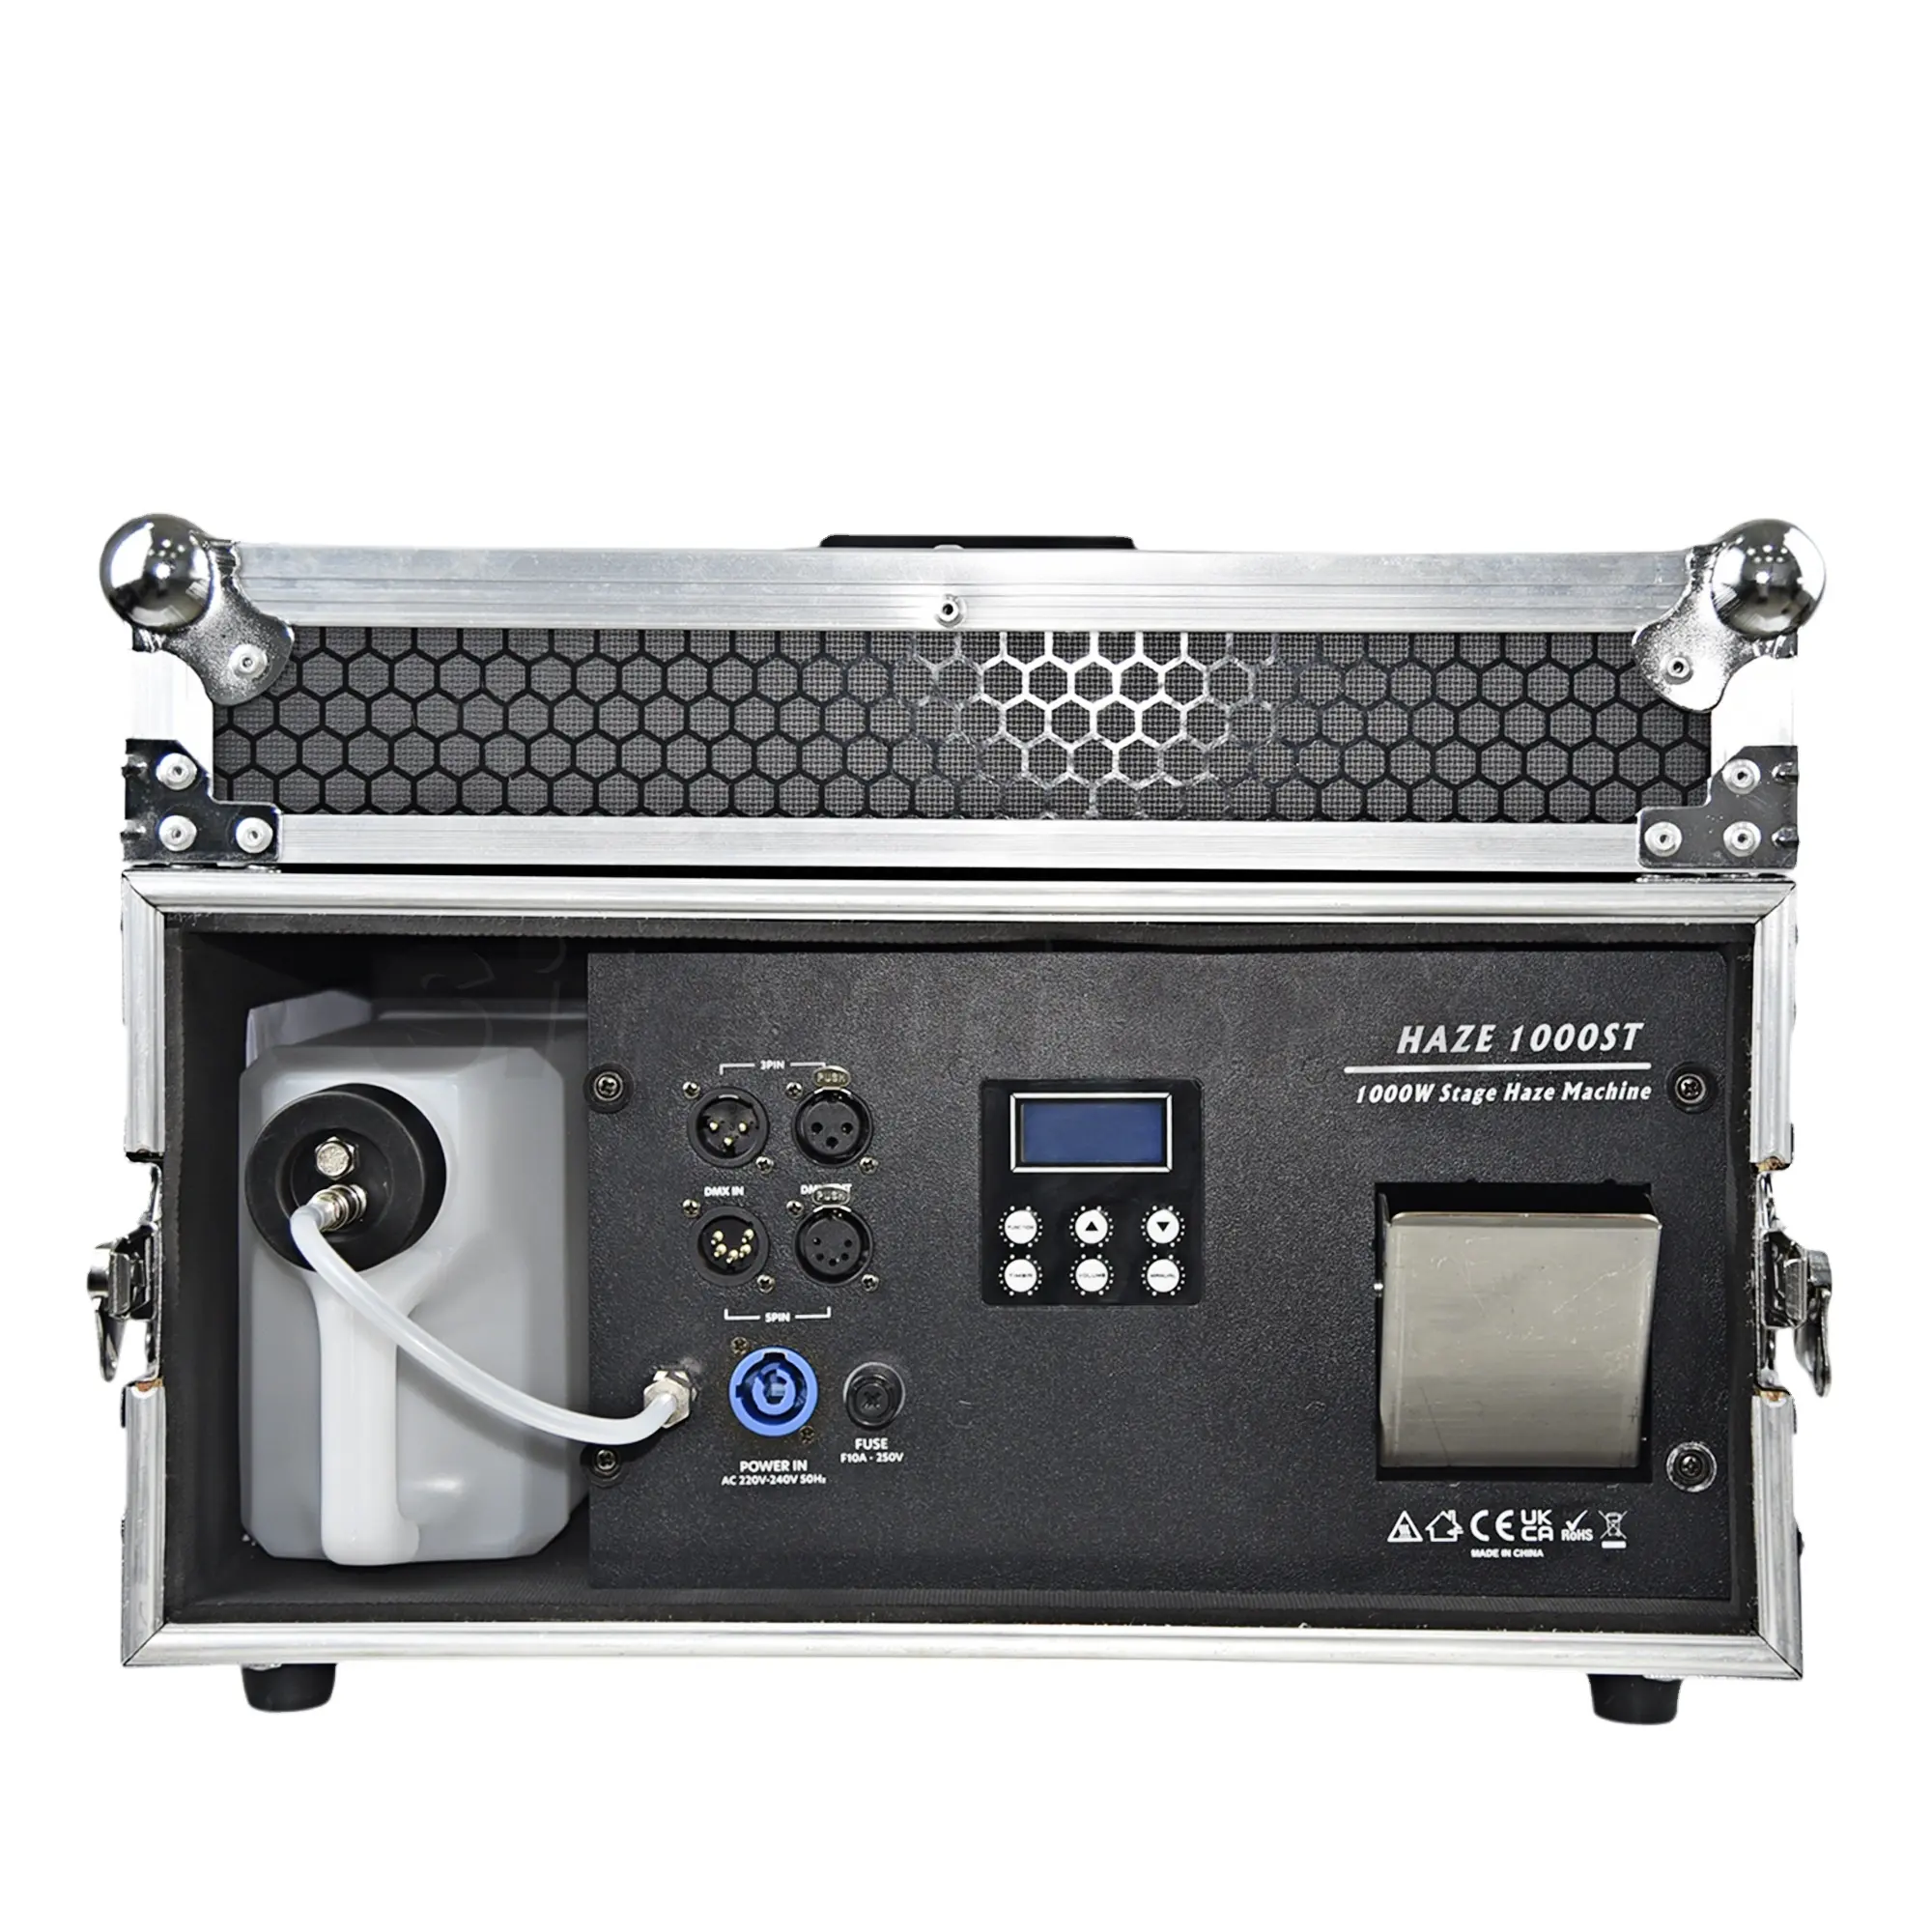 Siterui SFX Cheap 1000W Mist Haze Machine Professional Stage Equipment Fog Machine DMX512 Control For Disco DJ Party Stage Show